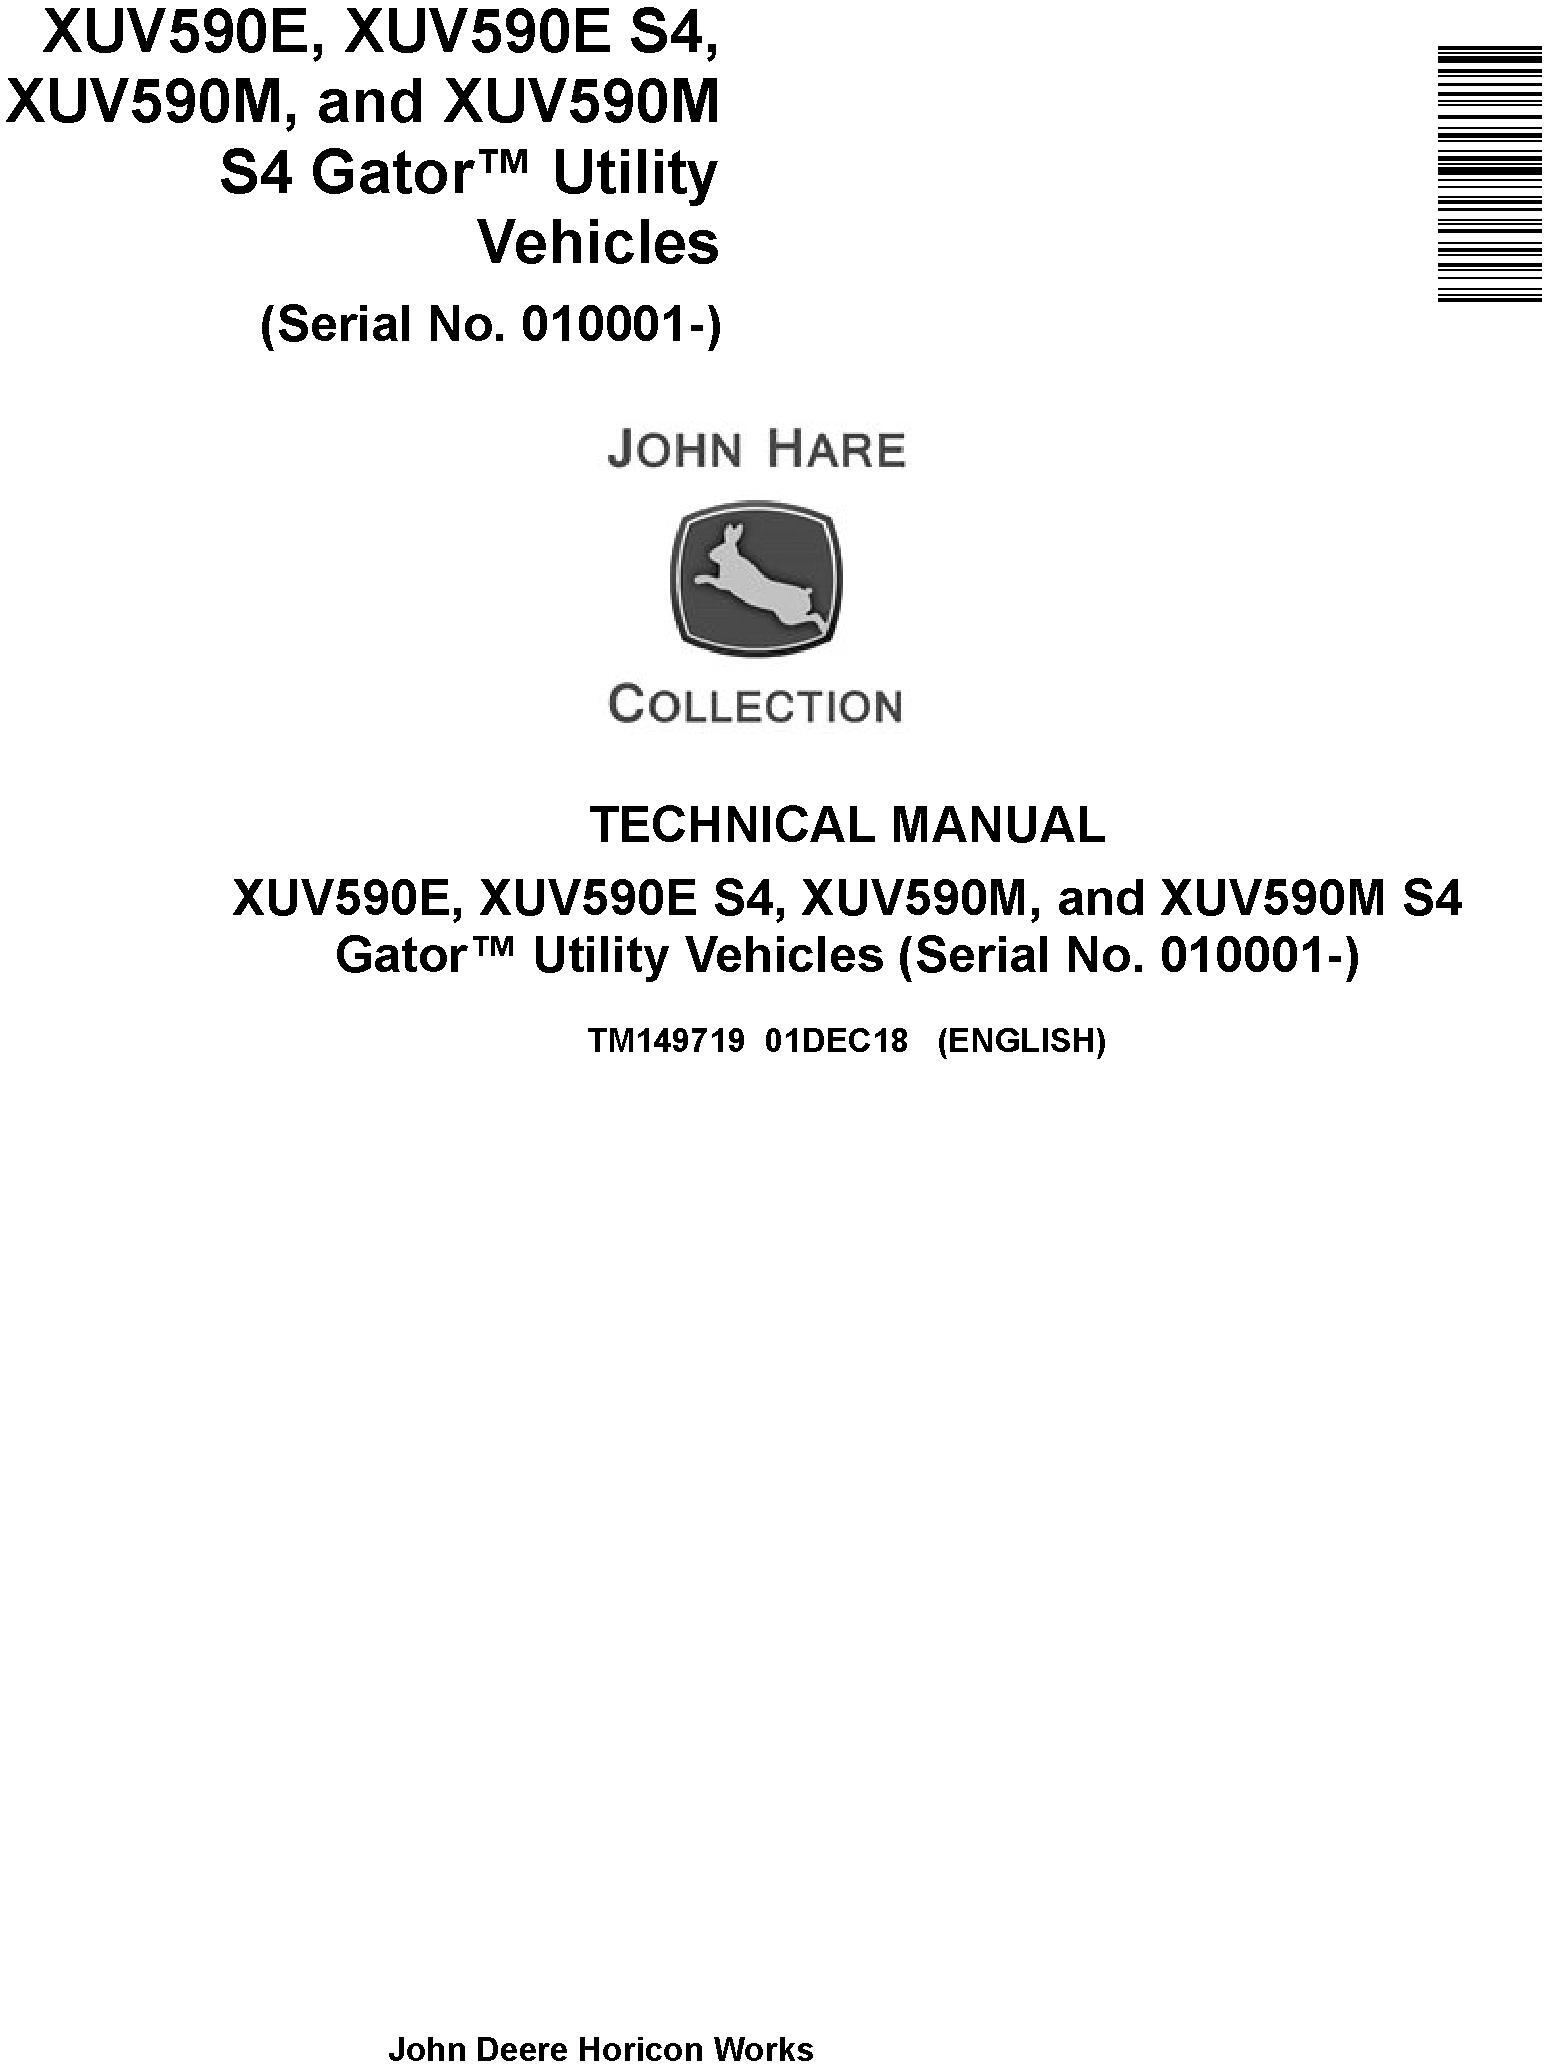 John Deere XUV590E(S4), XUV590E(S4) Gator Utility Vehicles (SN. 010001-) Technical Manual (TM149719) - 19297